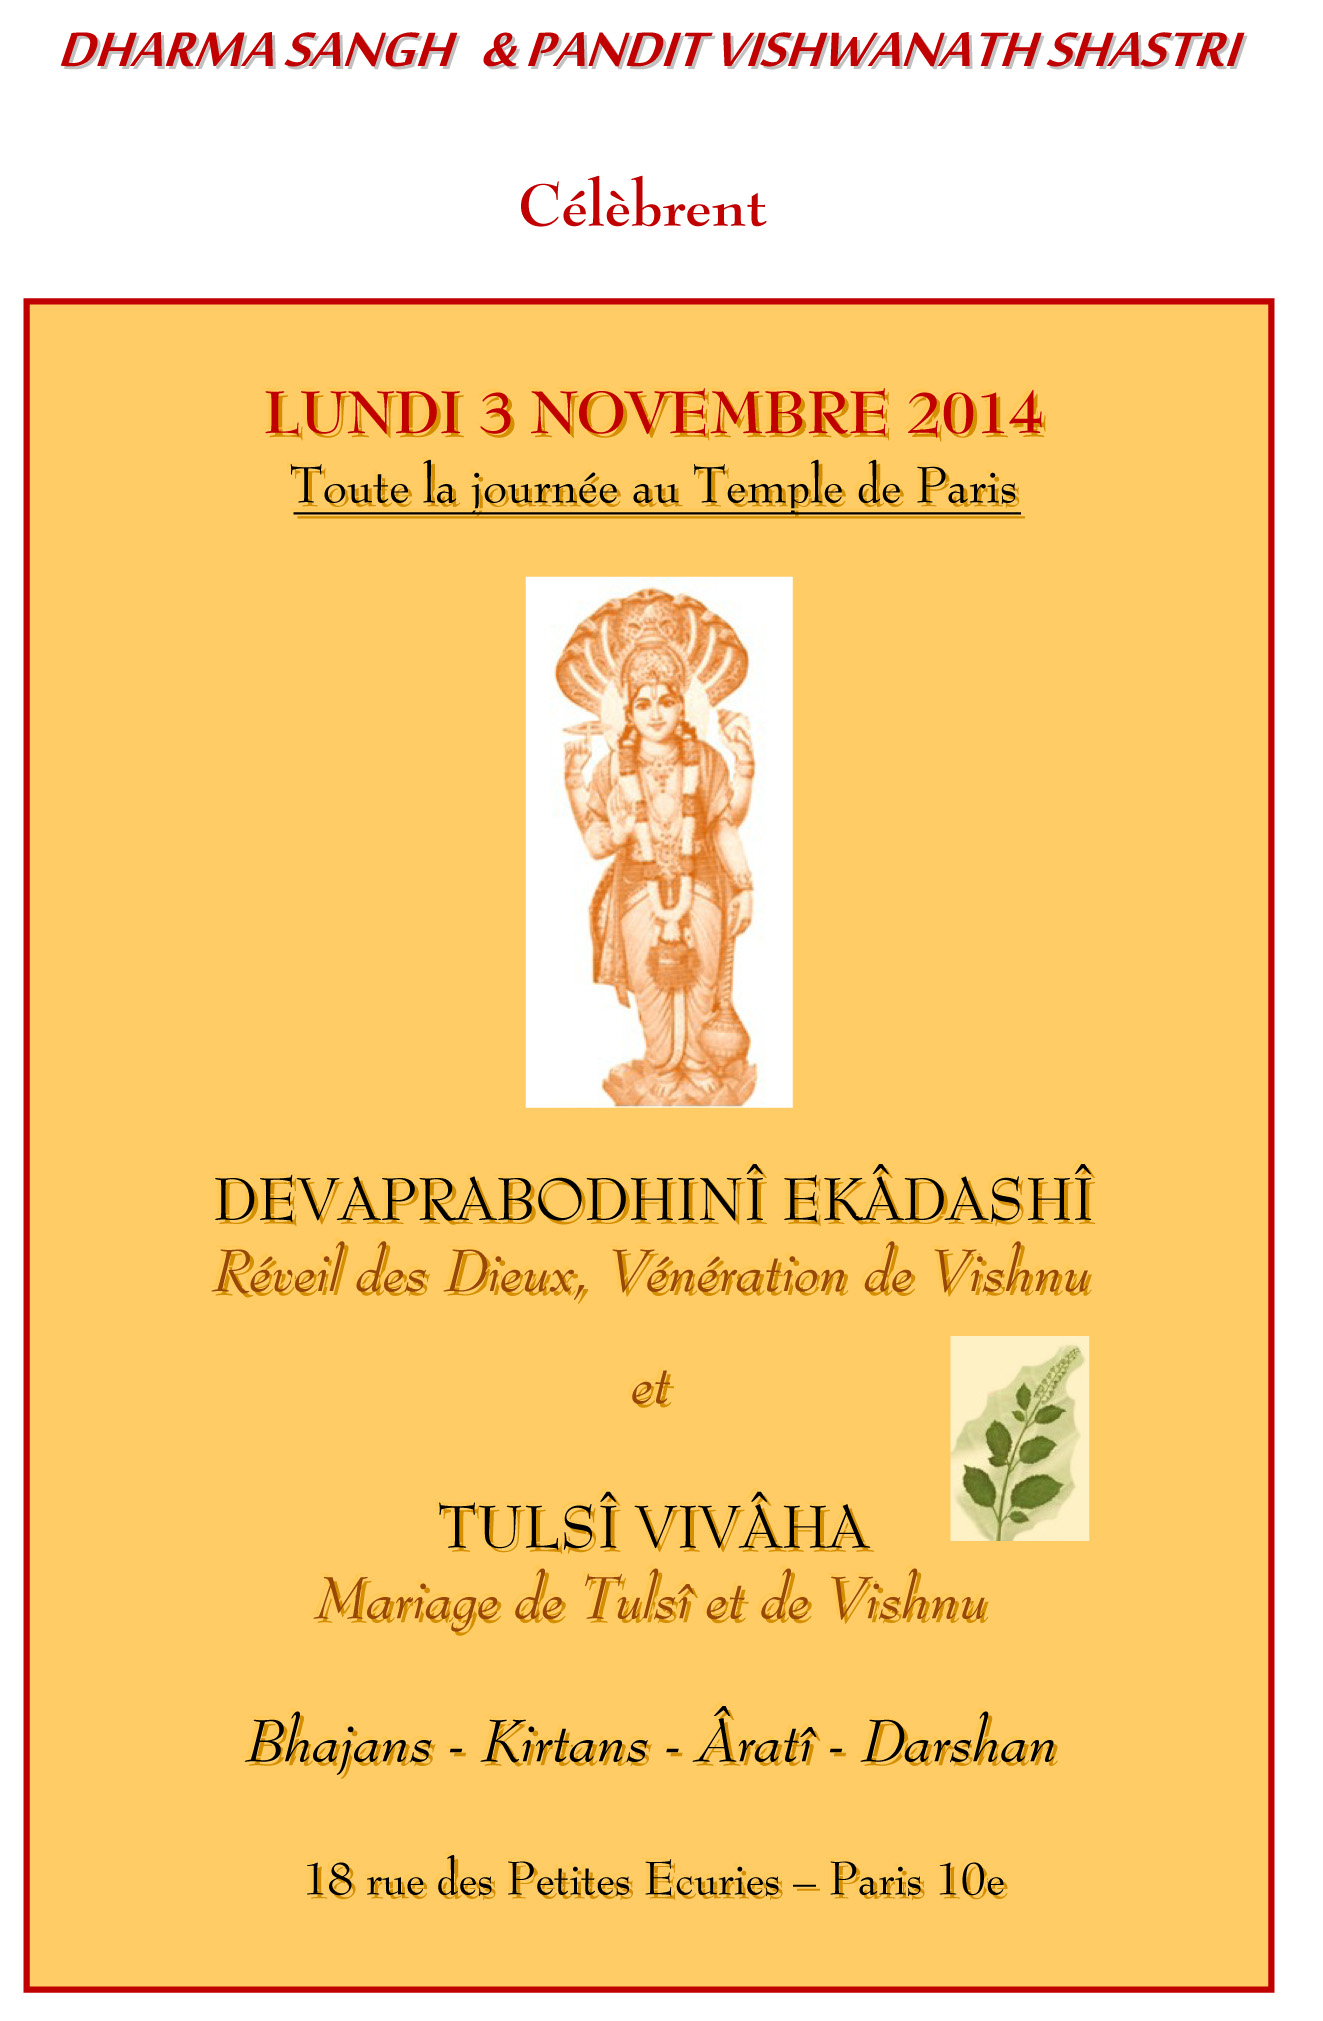 affiche annonce fête devaprabodhini ekadashi